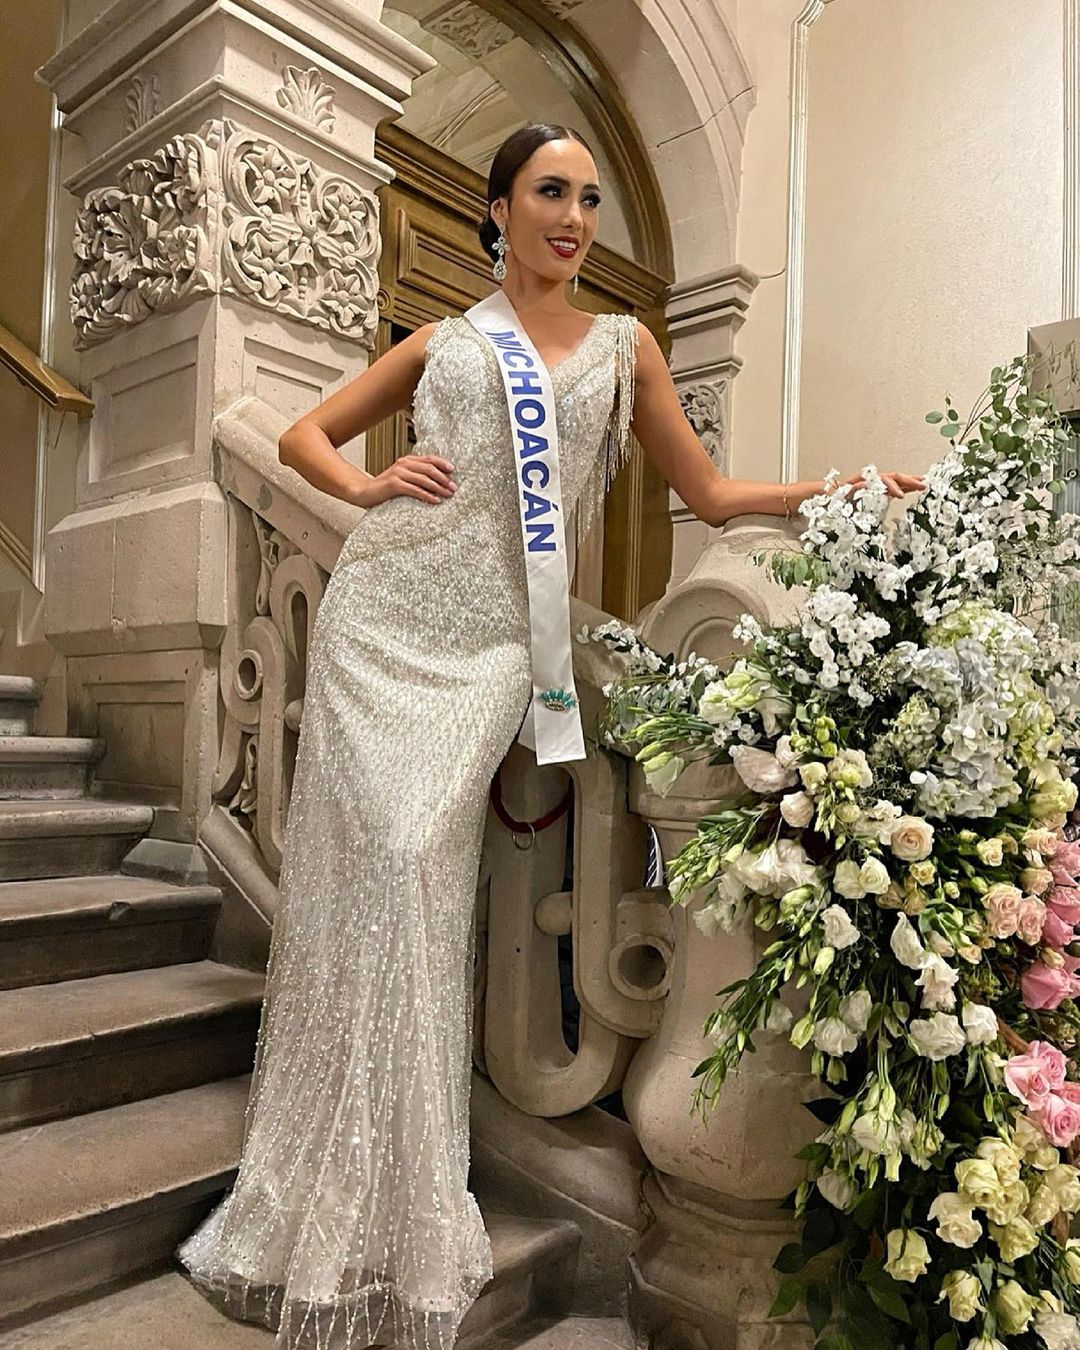 México - karolina vidales, top 6 de miss world 2021. - Página 12 21767610